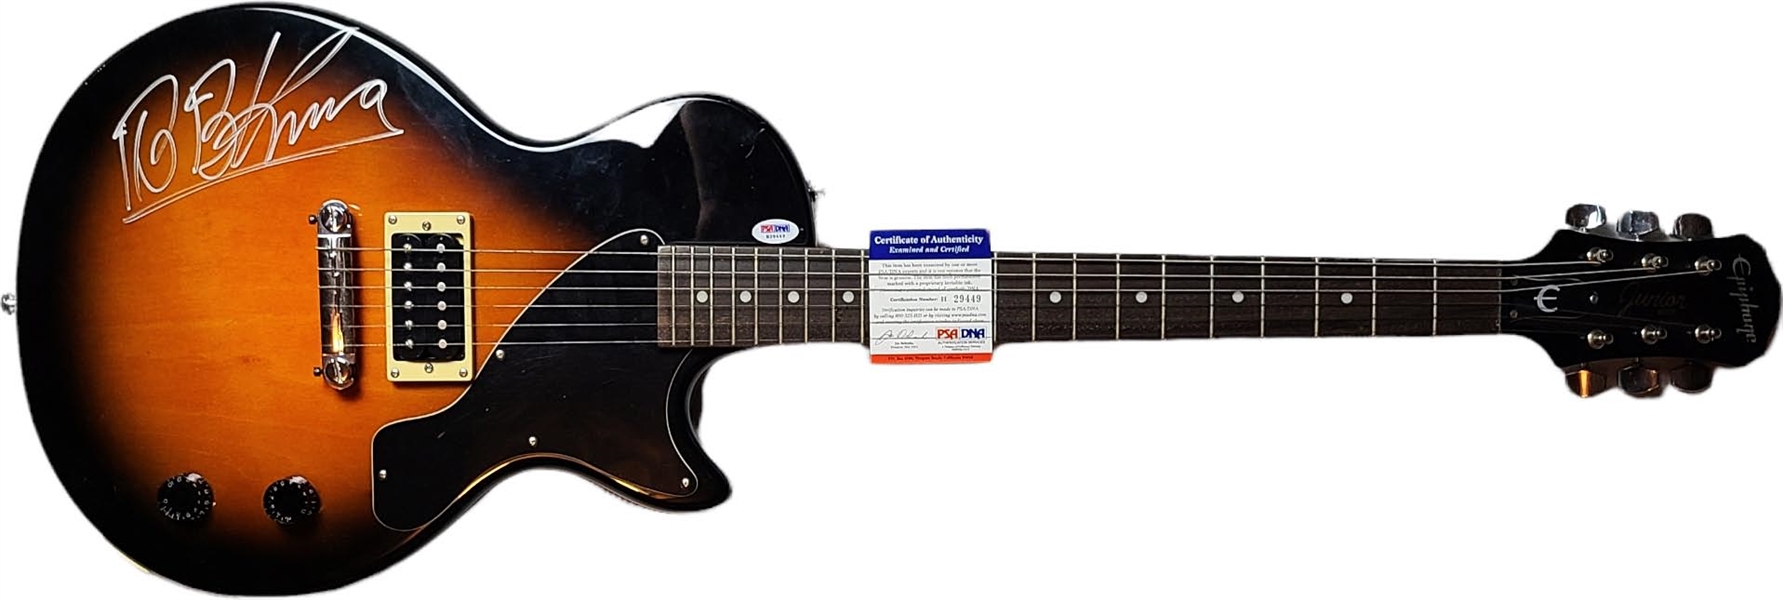 B.B. King Autographed Epiphone Guitar (PSA)